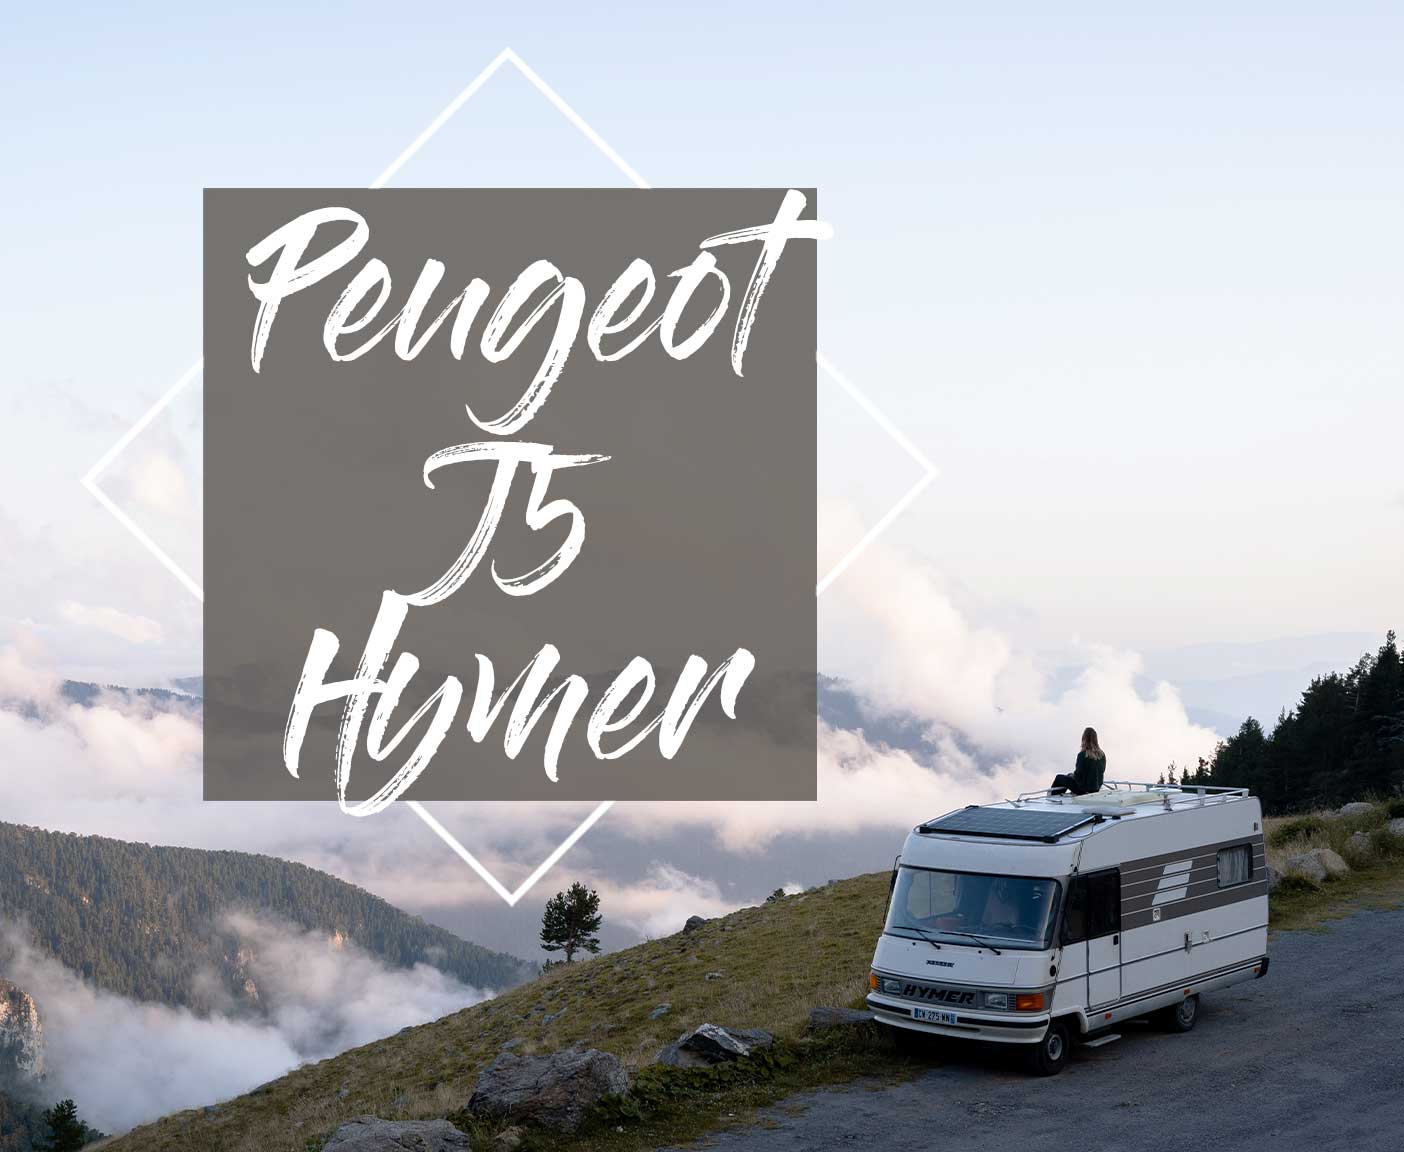 peugeot-j-5-hymer-camping-car-vanlife-leon-le-daron-roadtrip-europe